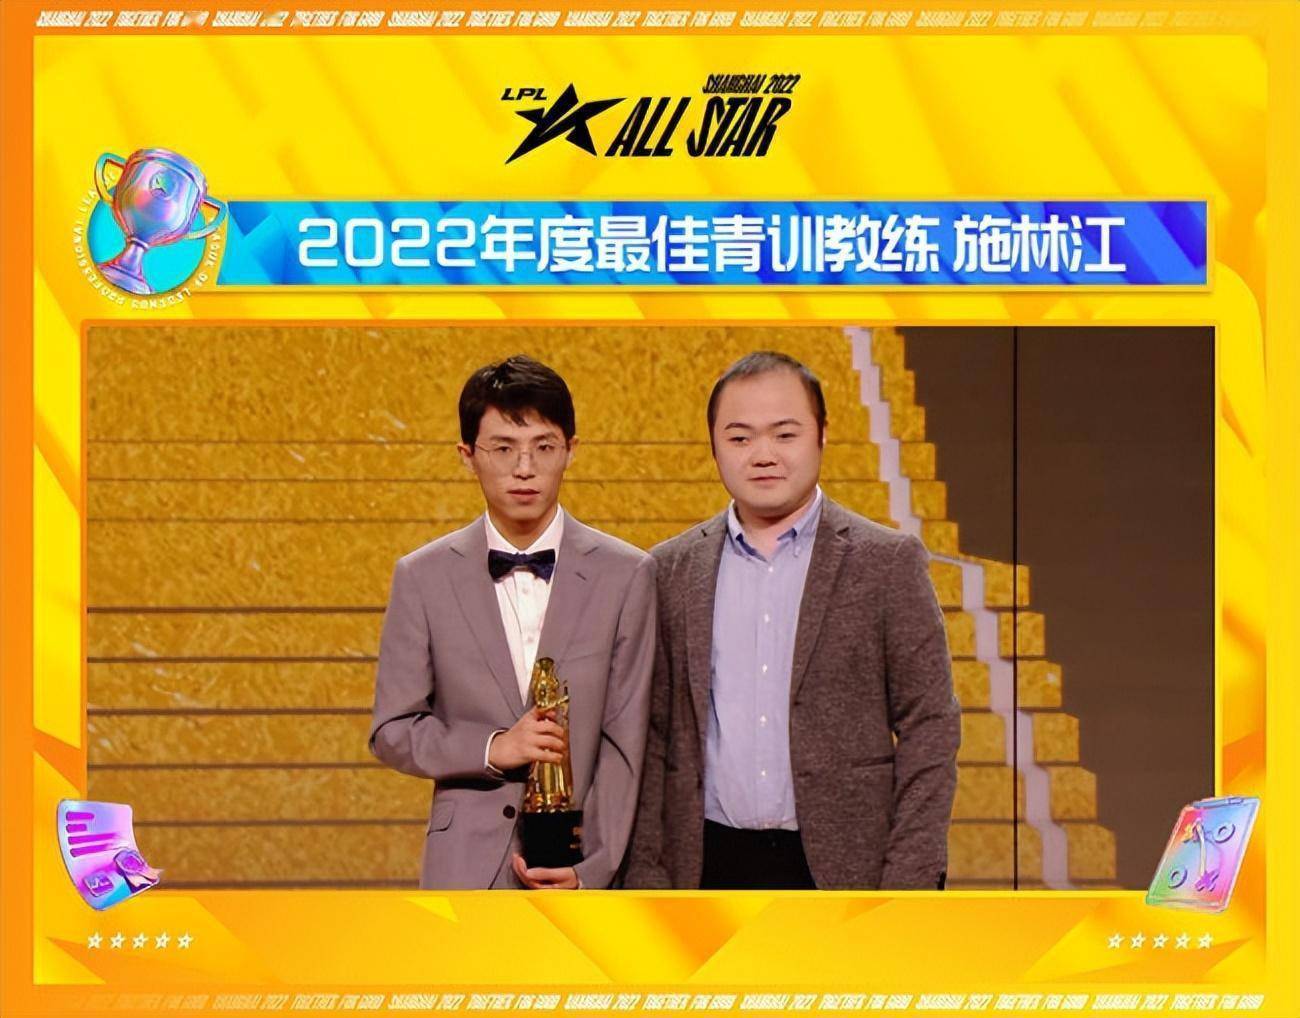 LOL：LPL年度颁奖盛典，OMG上单shanji荣膺年度最佳新秀